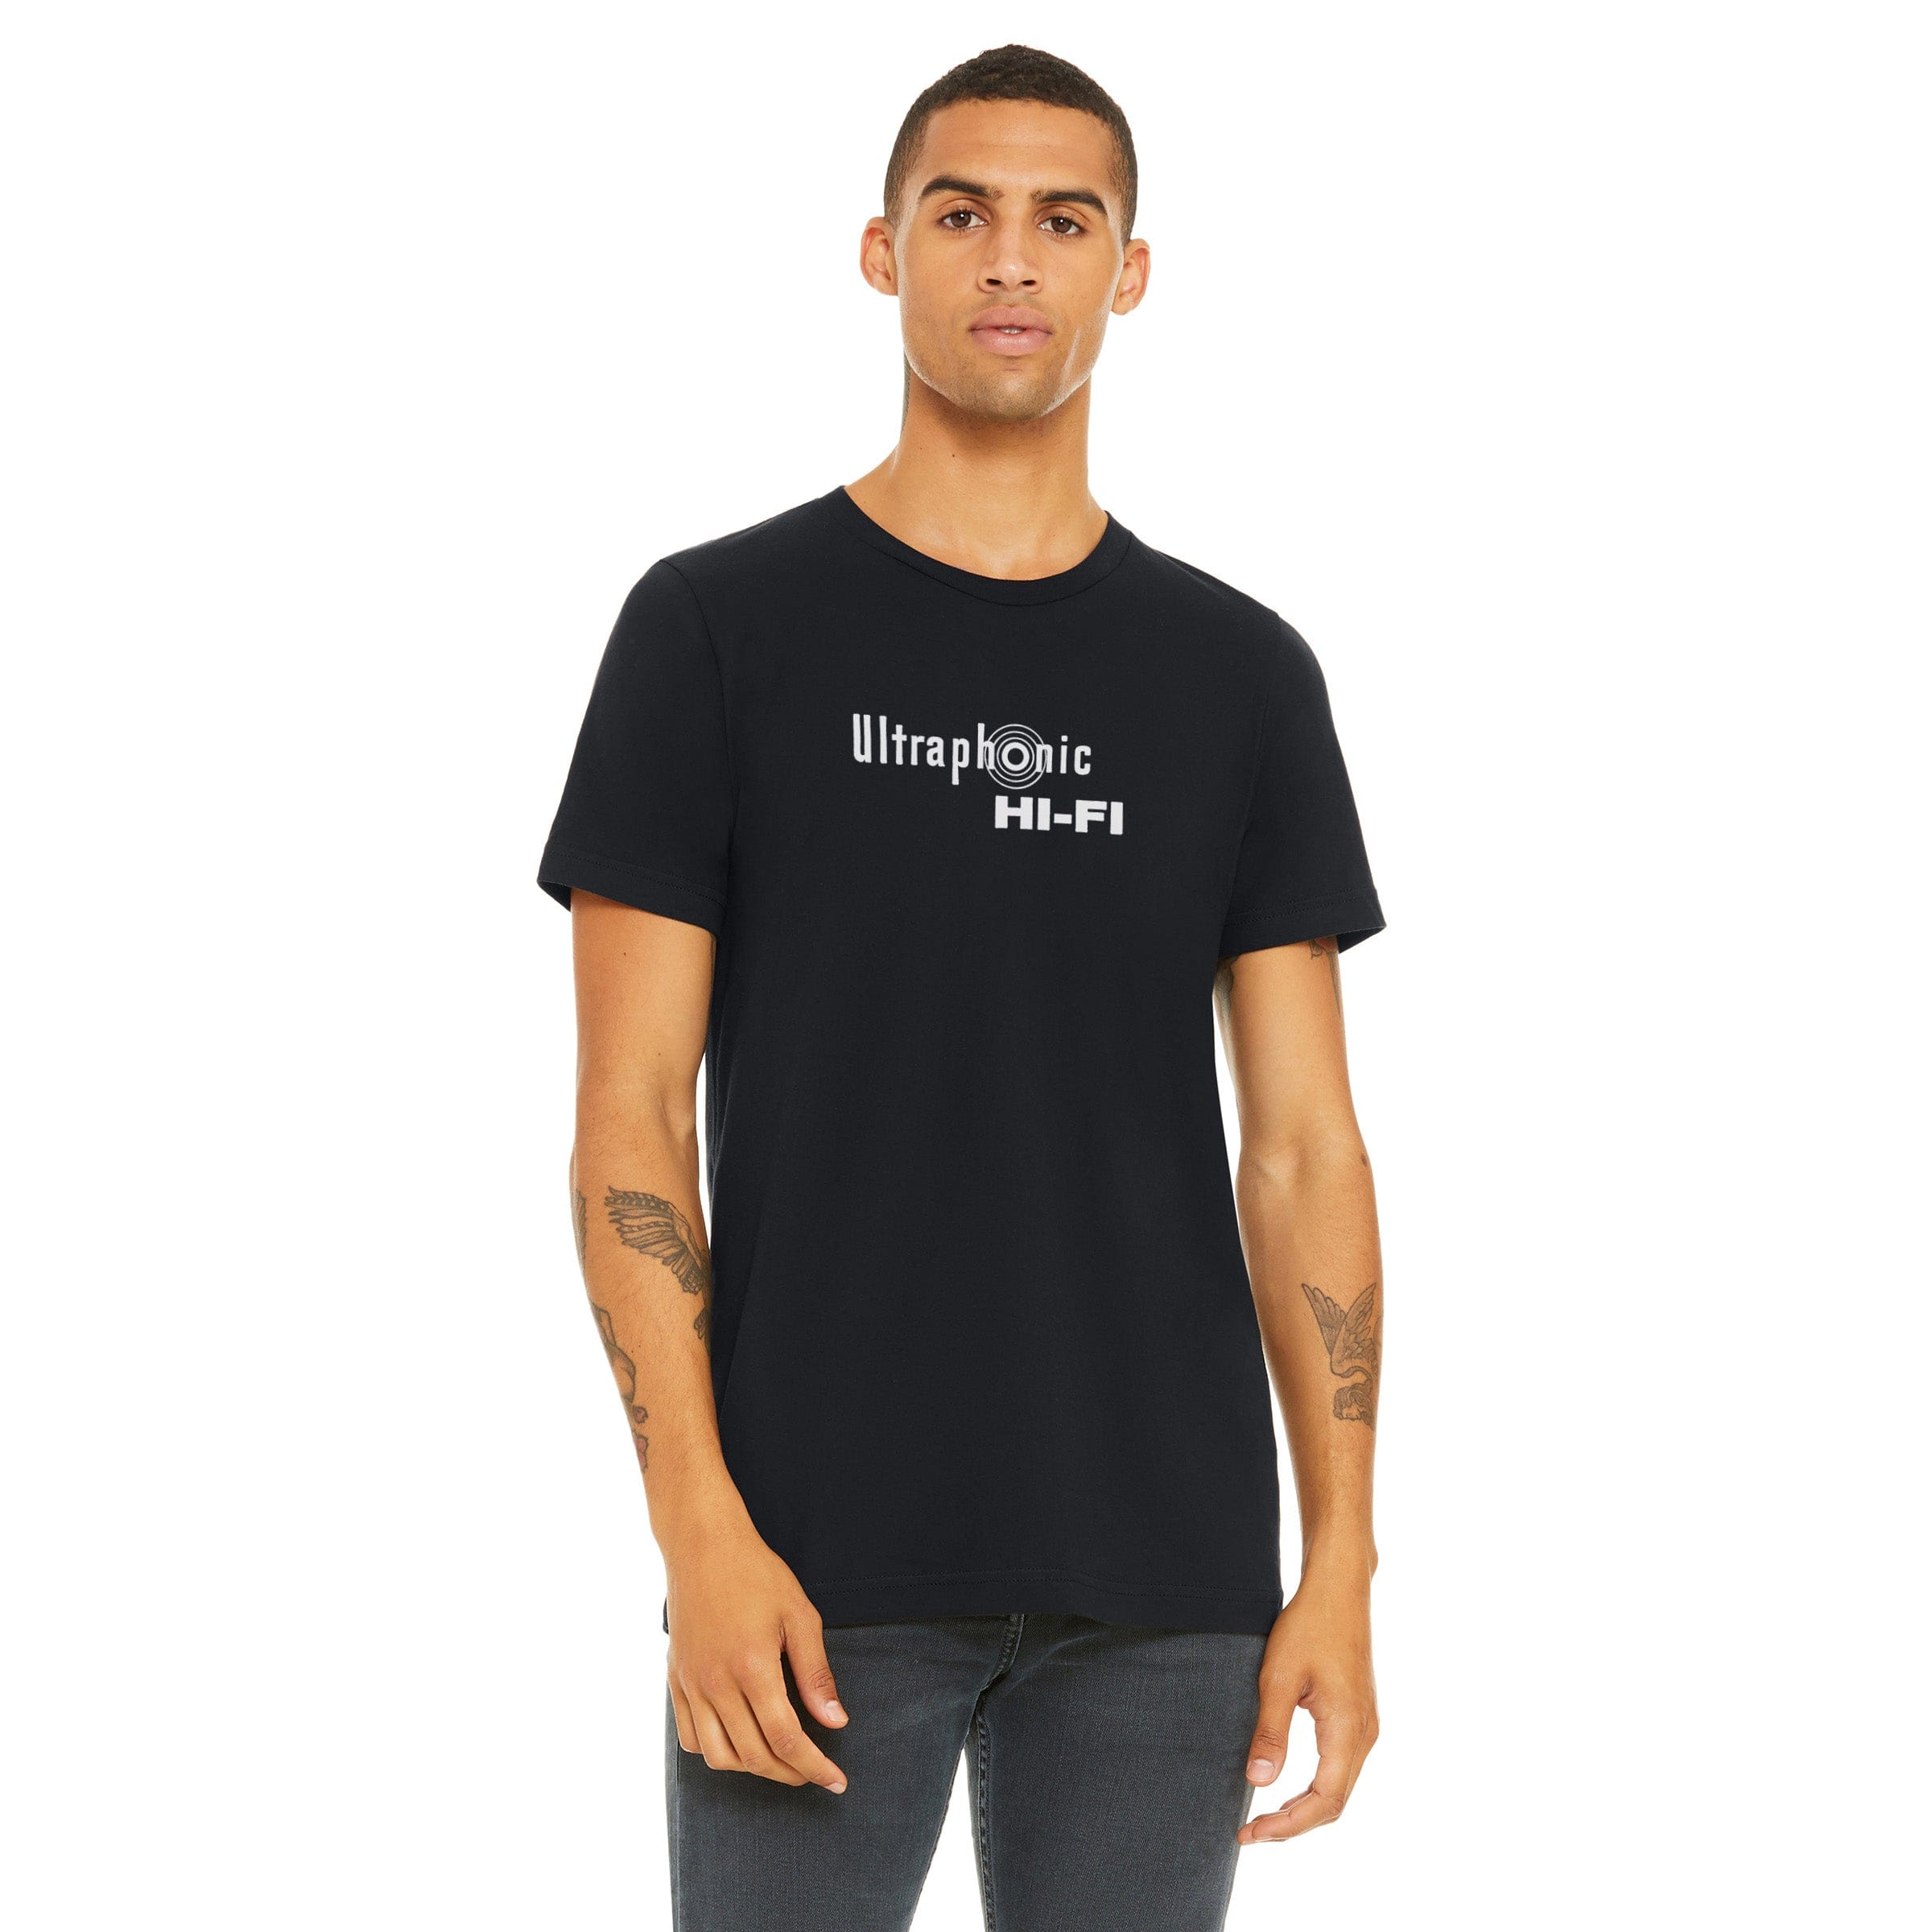 Ultraphonic Hi-Fi T-Shirt